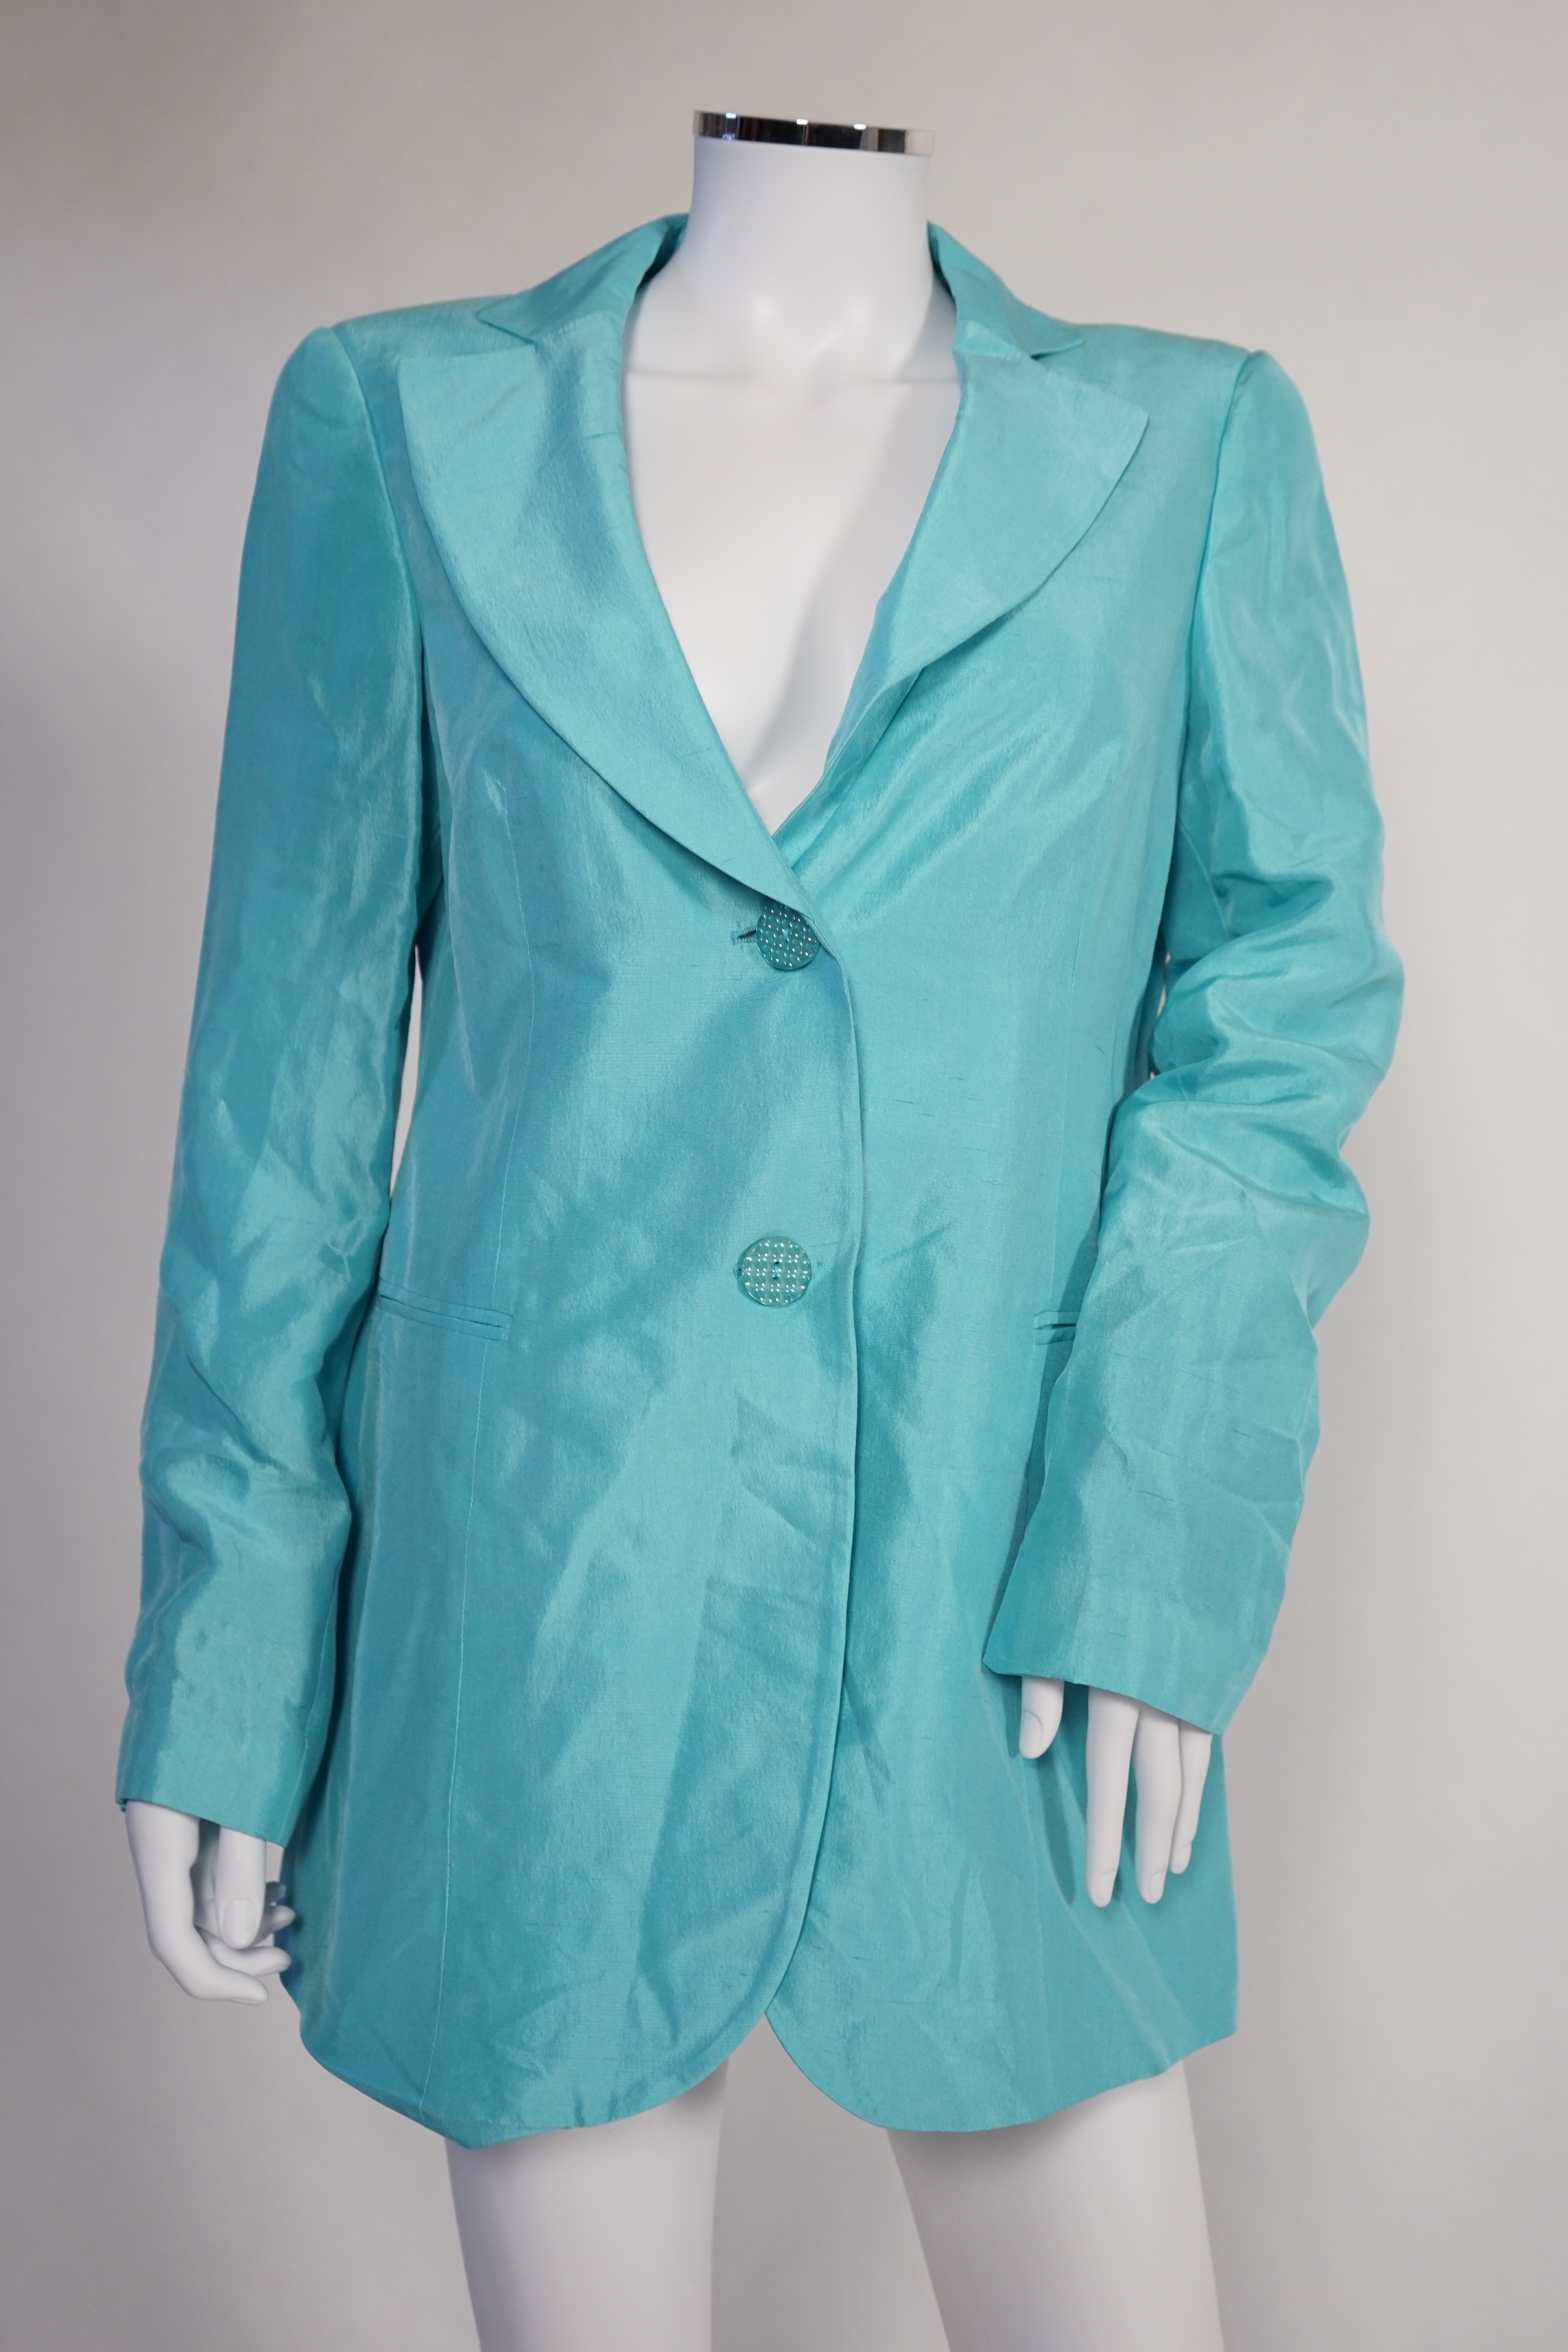 Four Emporio Armani lady's jackets, light blue silk size EU 46, all the others size EU 44